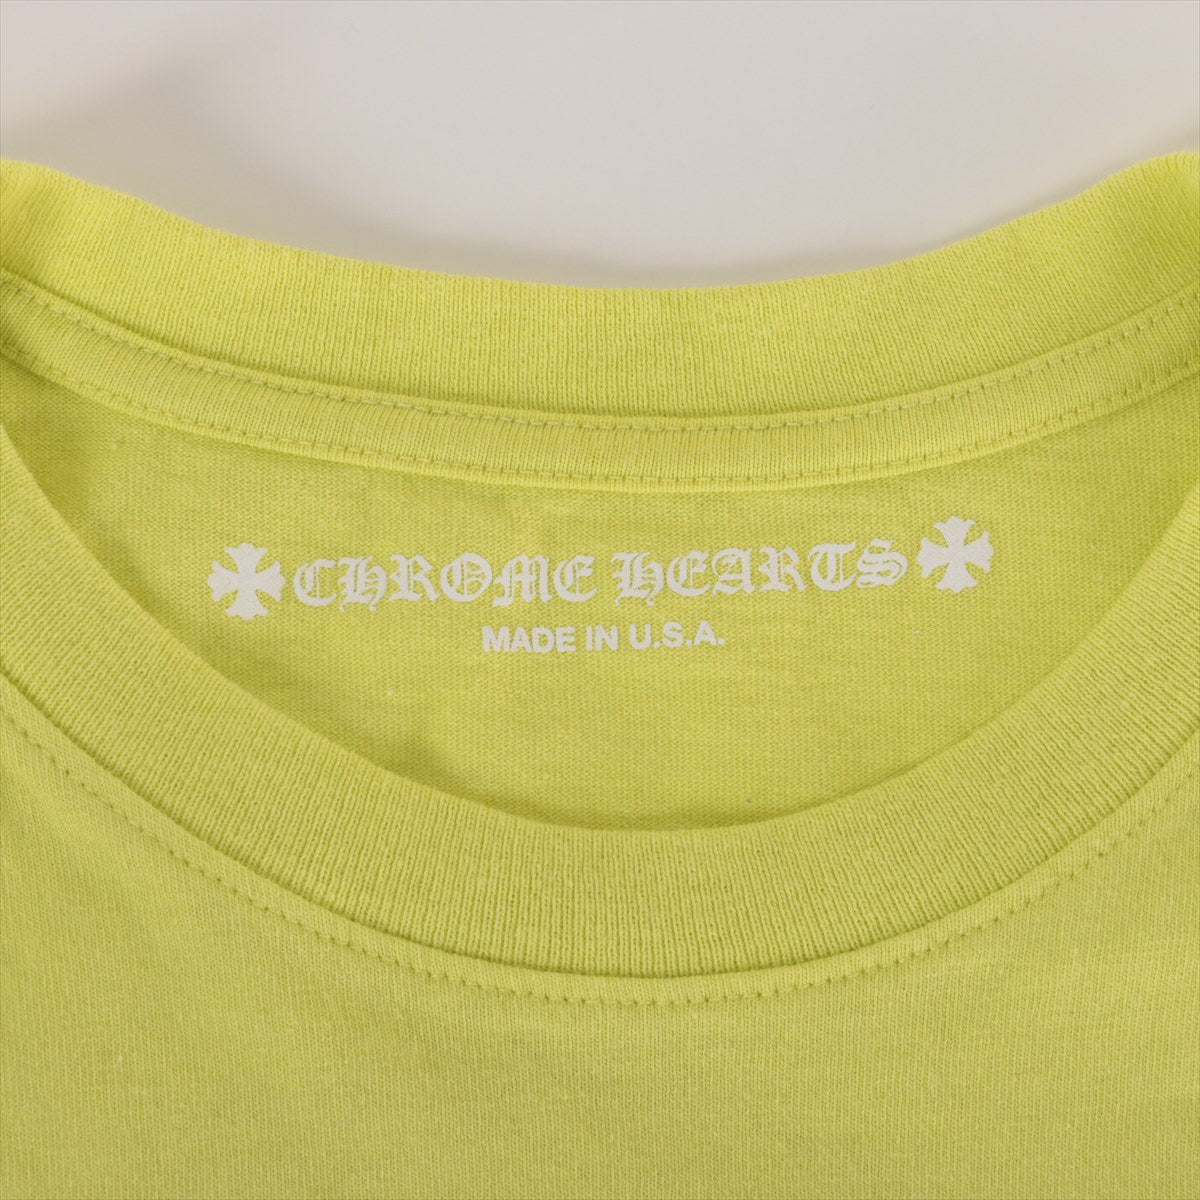 Chrome Hearts Matty Boy T-shirt Cotton size XL lime green PPO CHAIN GAME